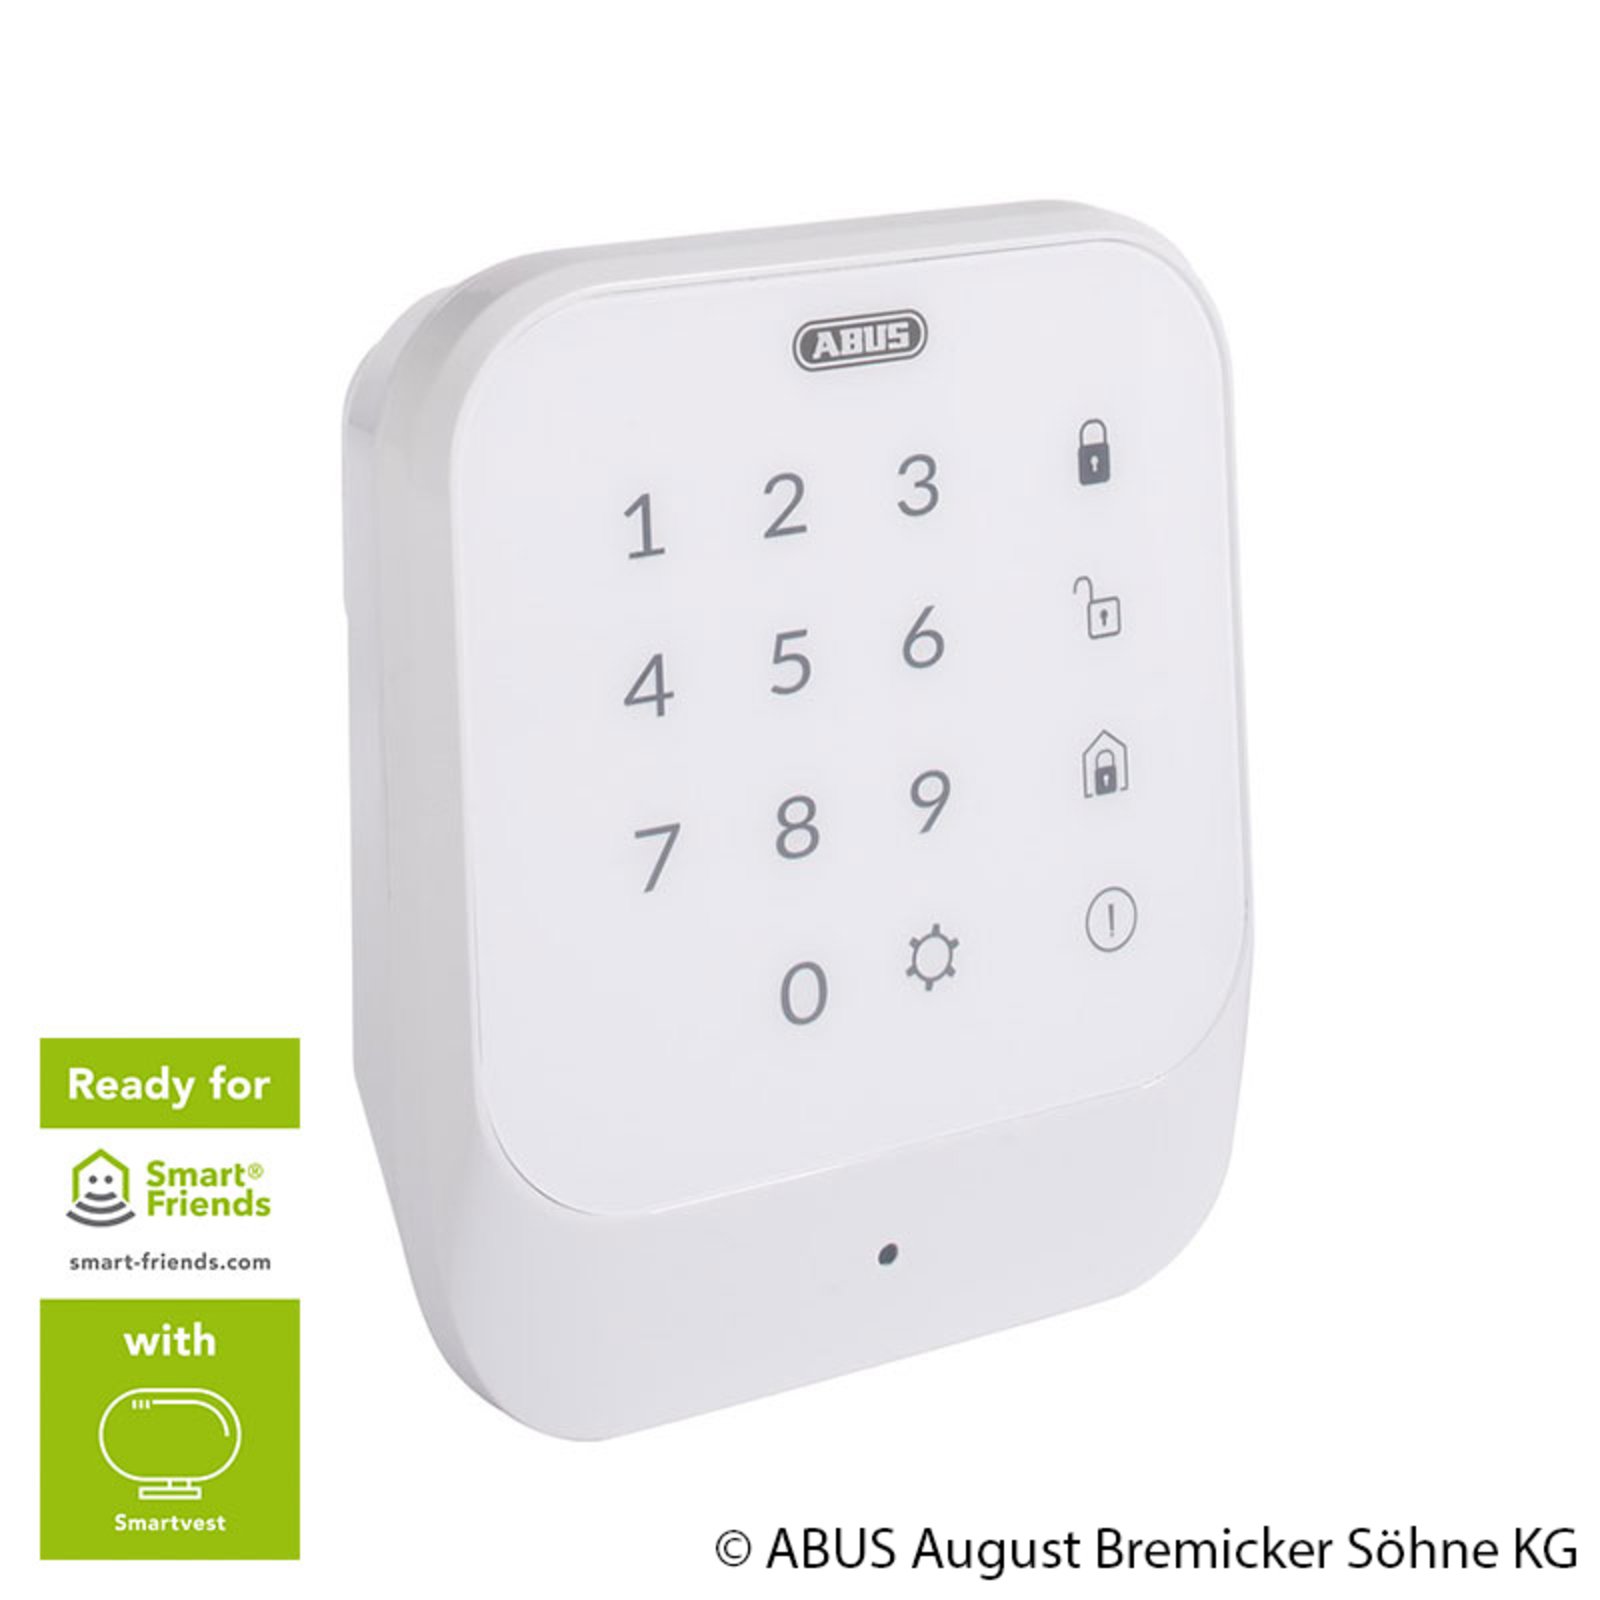 ABUS Smartvest wireless control panel